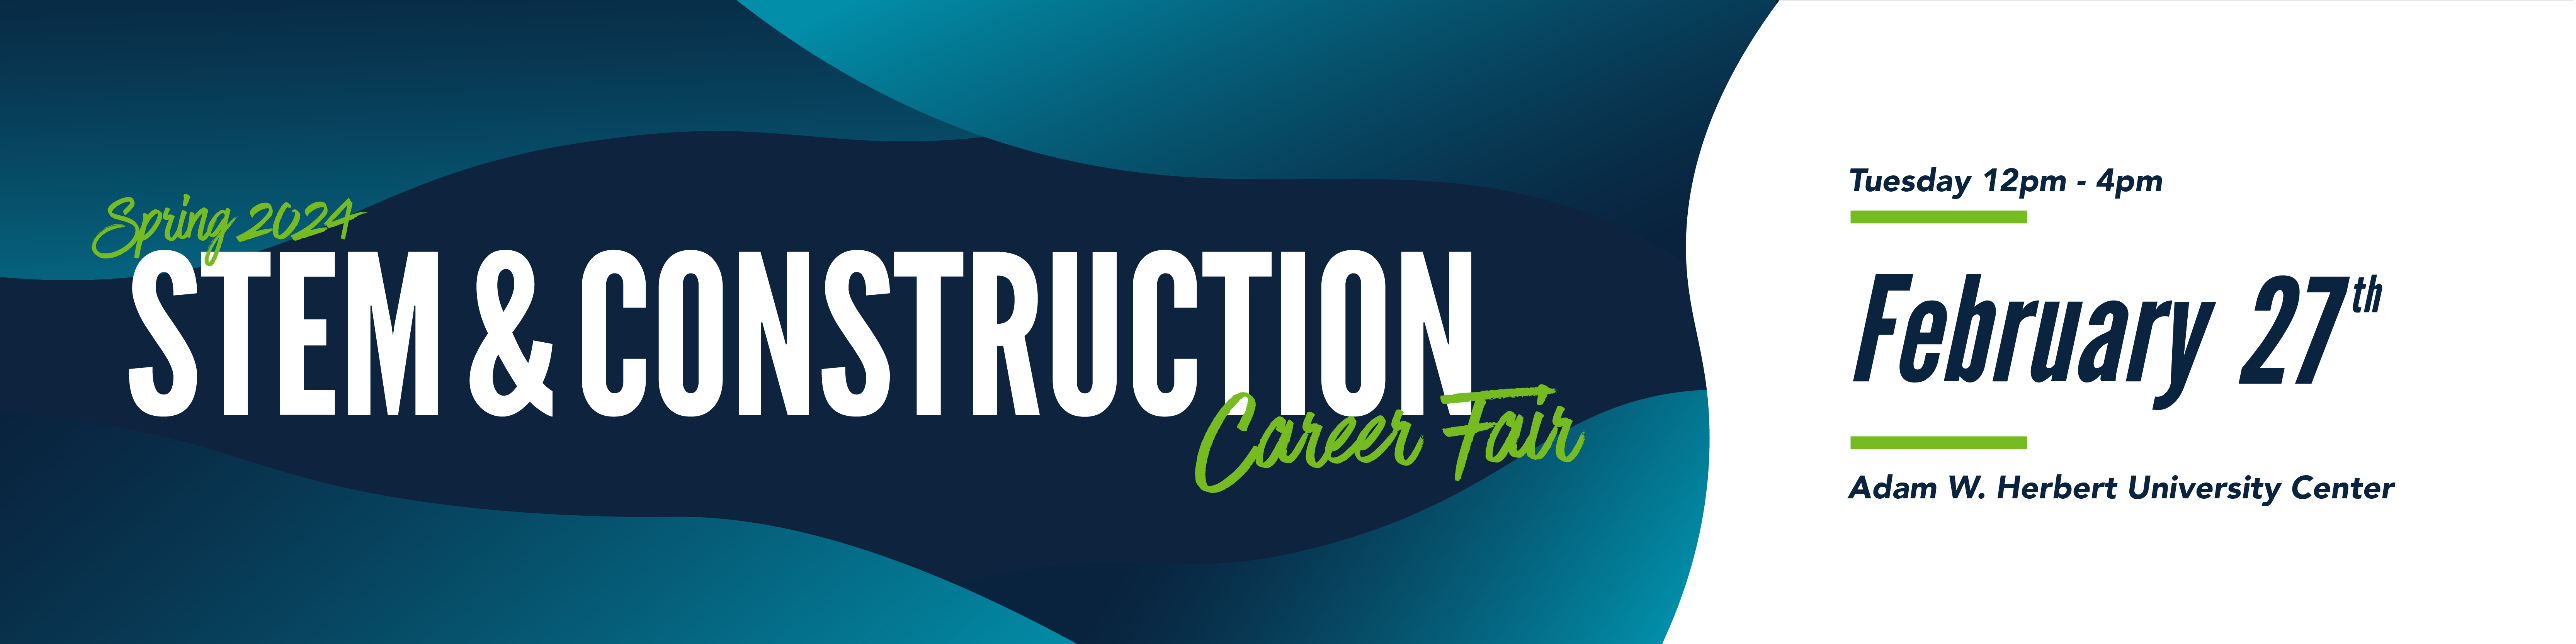 Spring 2024 Stem and Construction Career Fair Tuesday 12-4 pm February 27th Adam W Herbert University Center